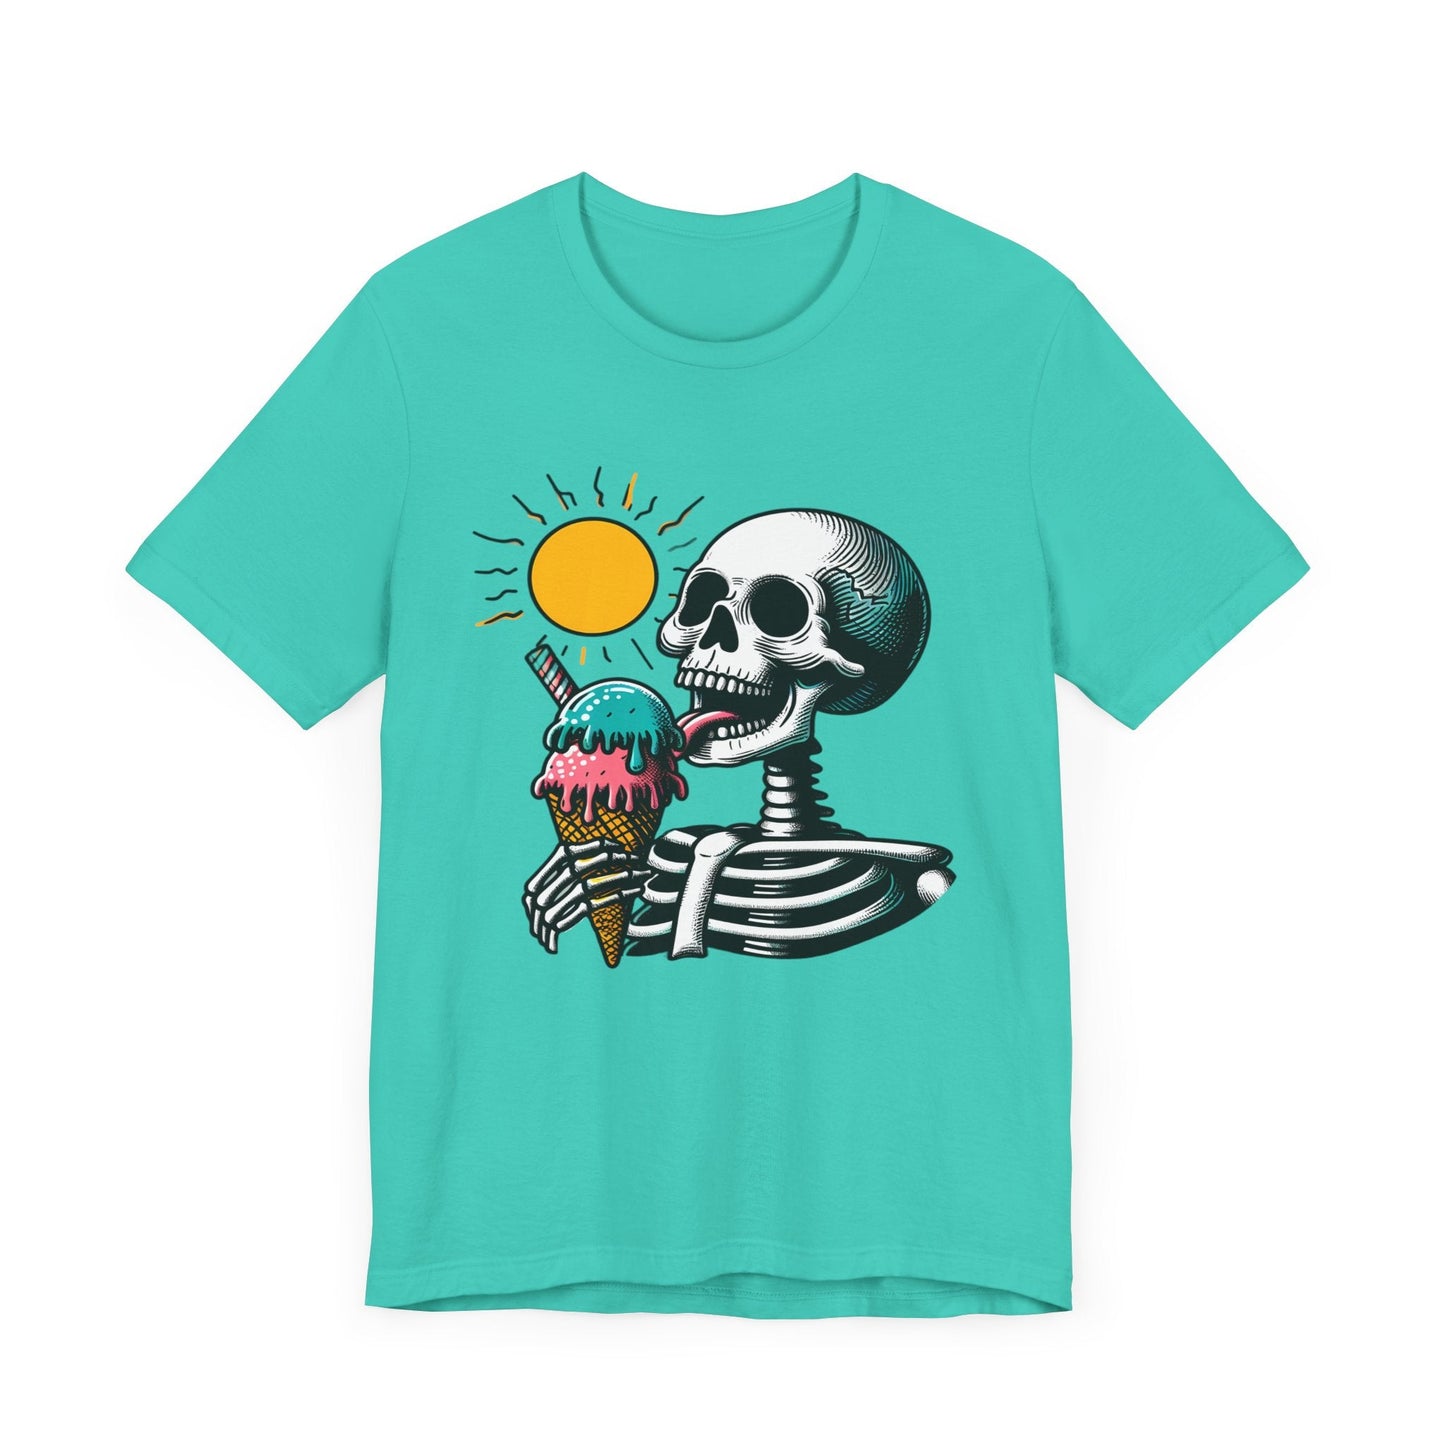 Skeleton Ice Cream Short Sleeve Tee ShirtT - ShirtVTZdesignsTealXSclothingCottonCrew neck